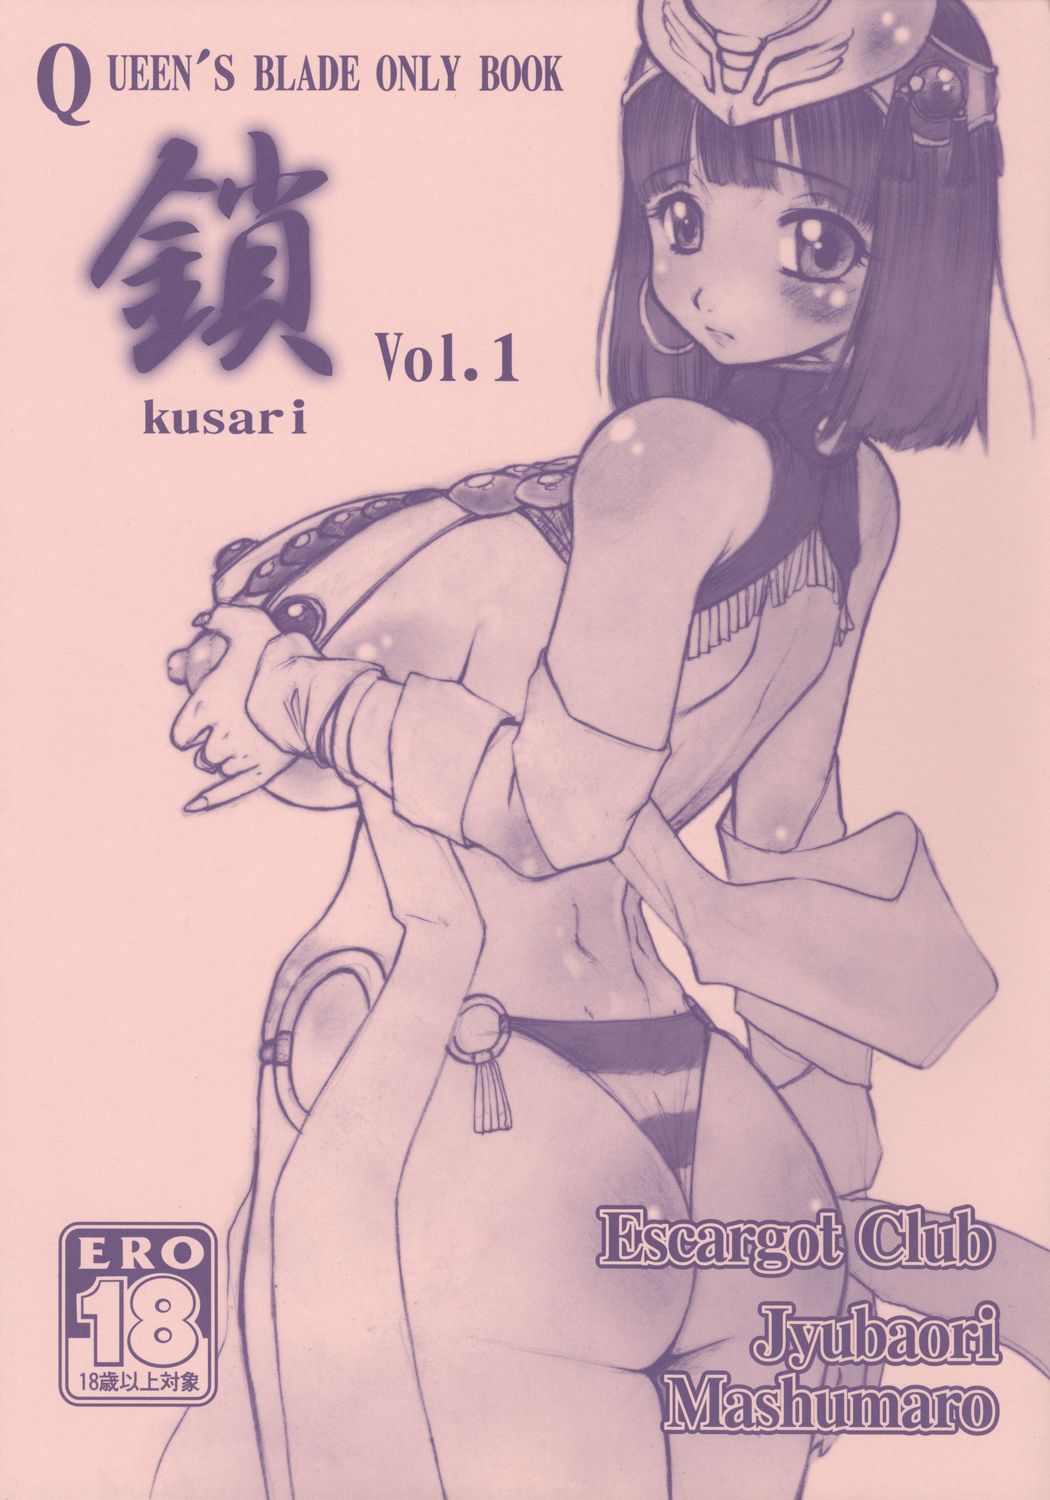 Read Escargot Club Juubaori Mashumaro Kusari Vol Queen S Blade